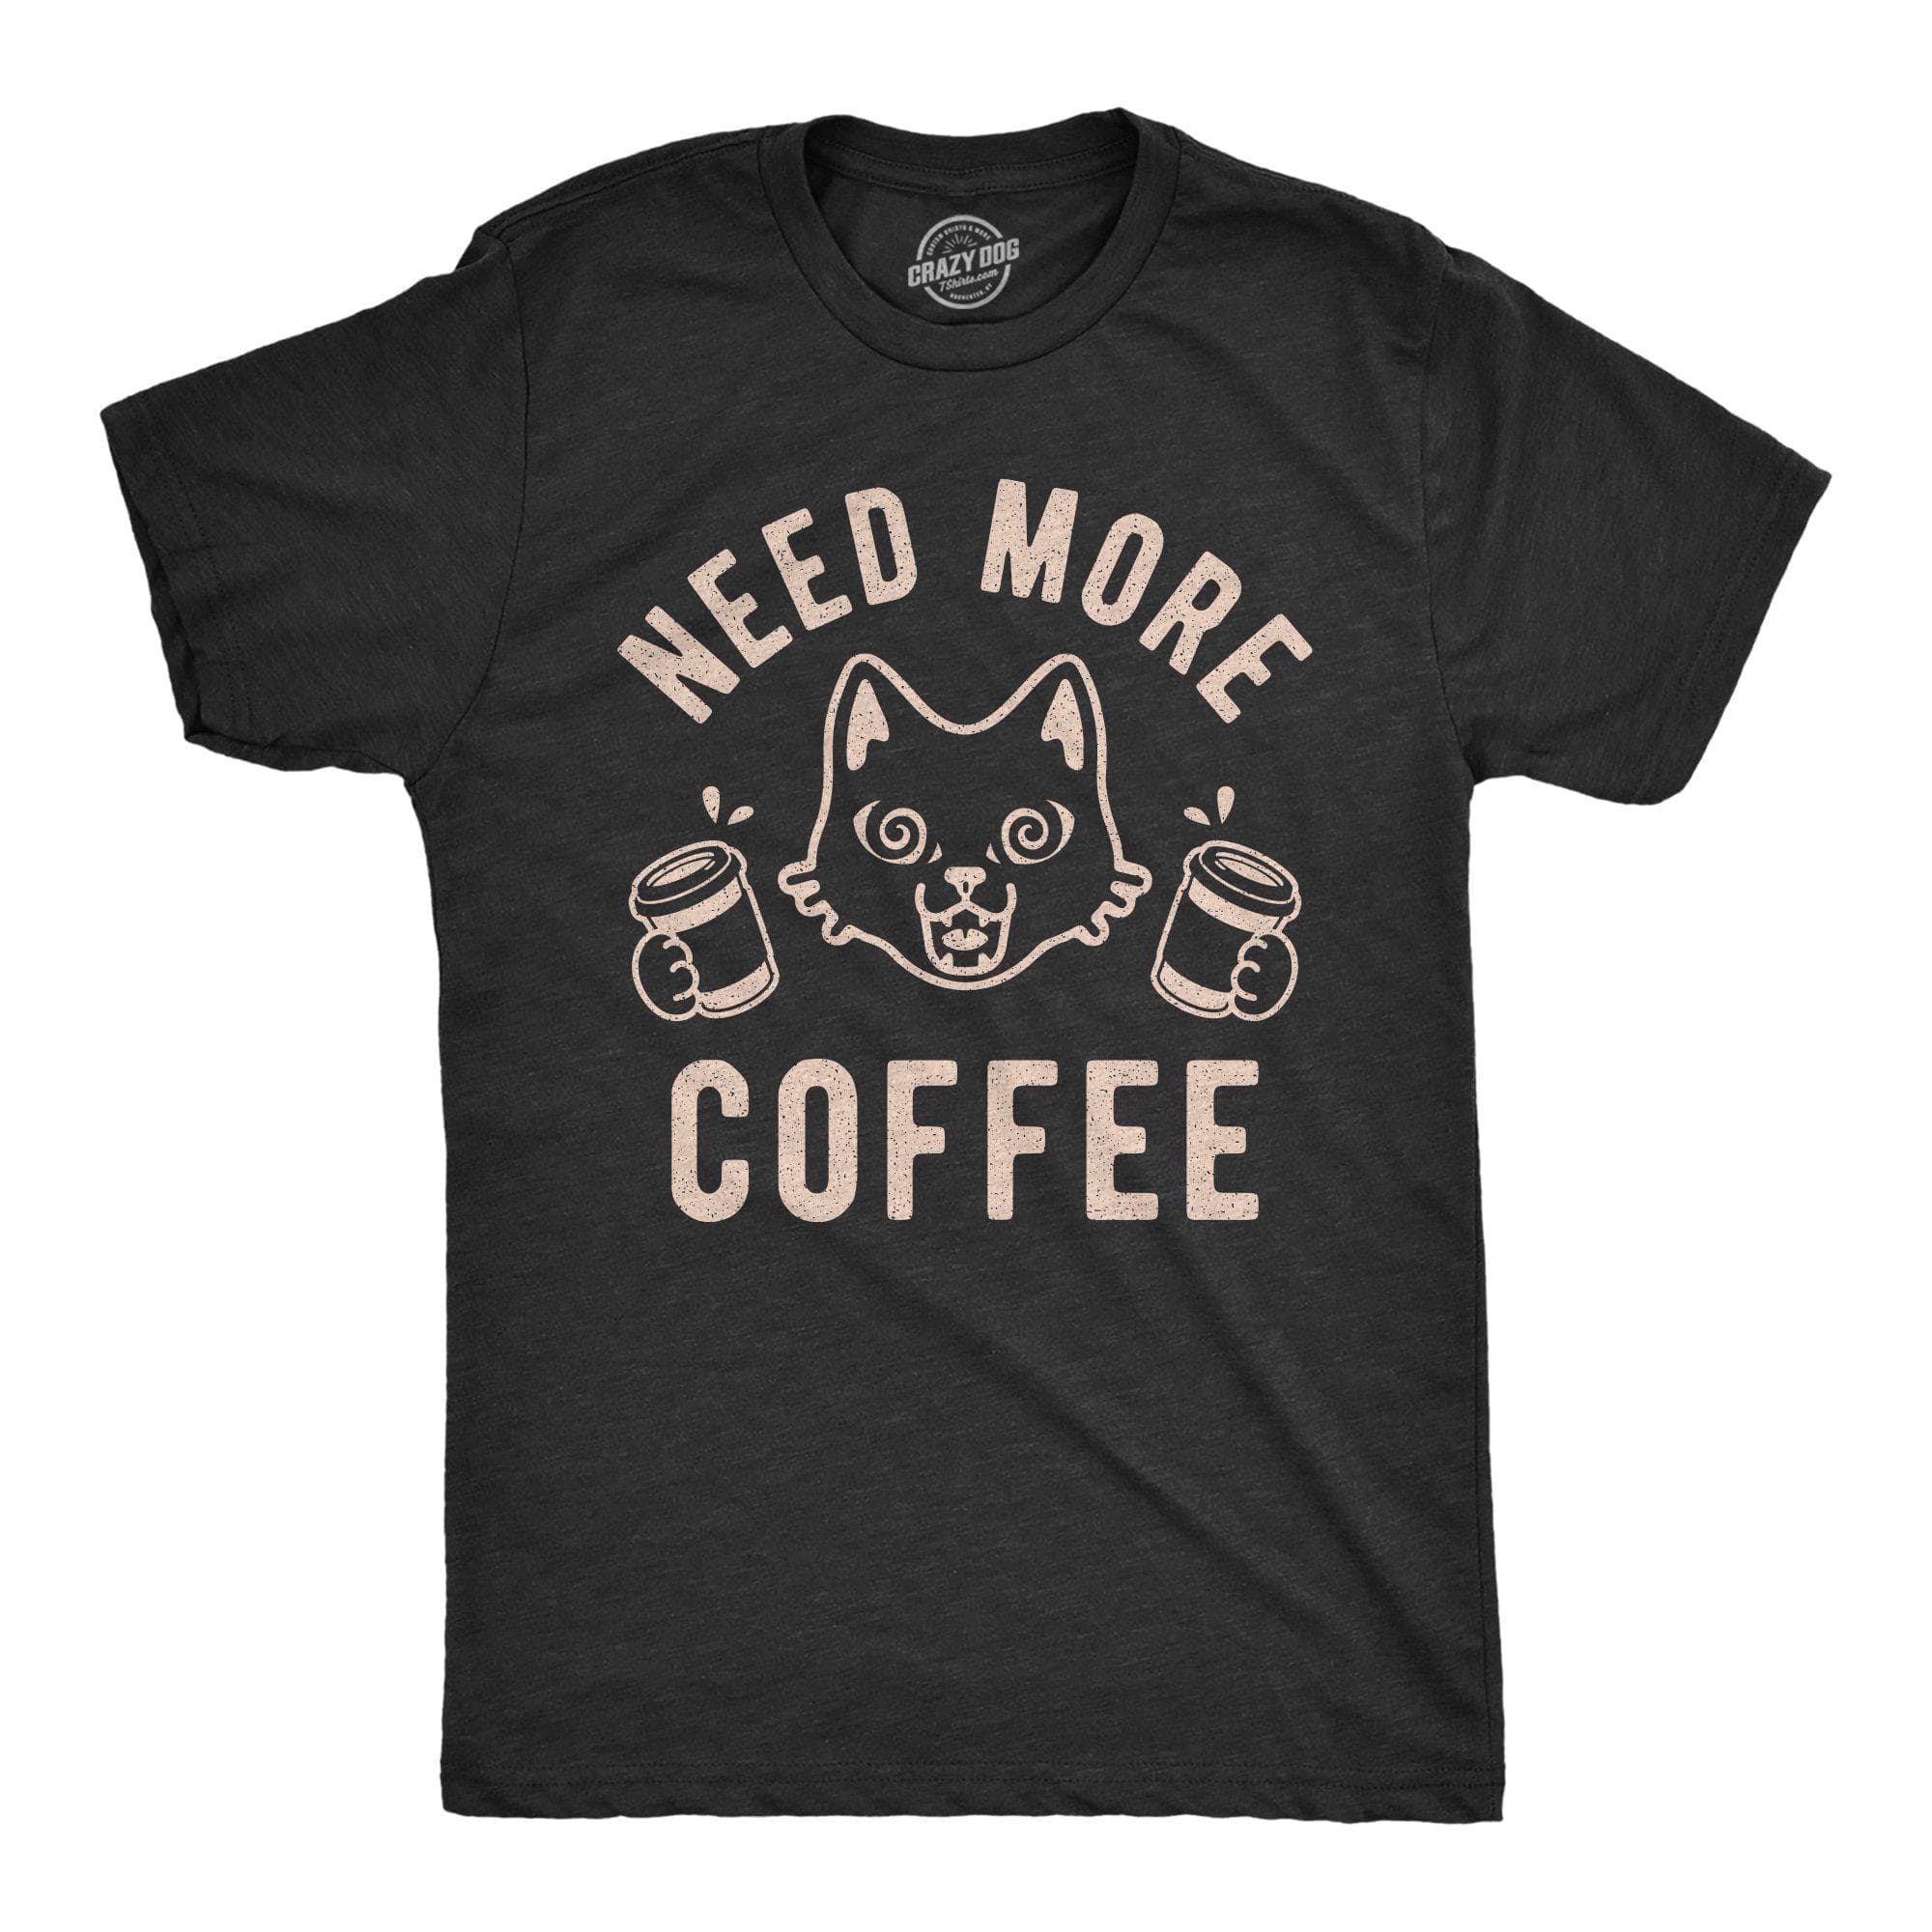 Need More Coffee Men's Tshirt - Crazy Dog T-Shirts